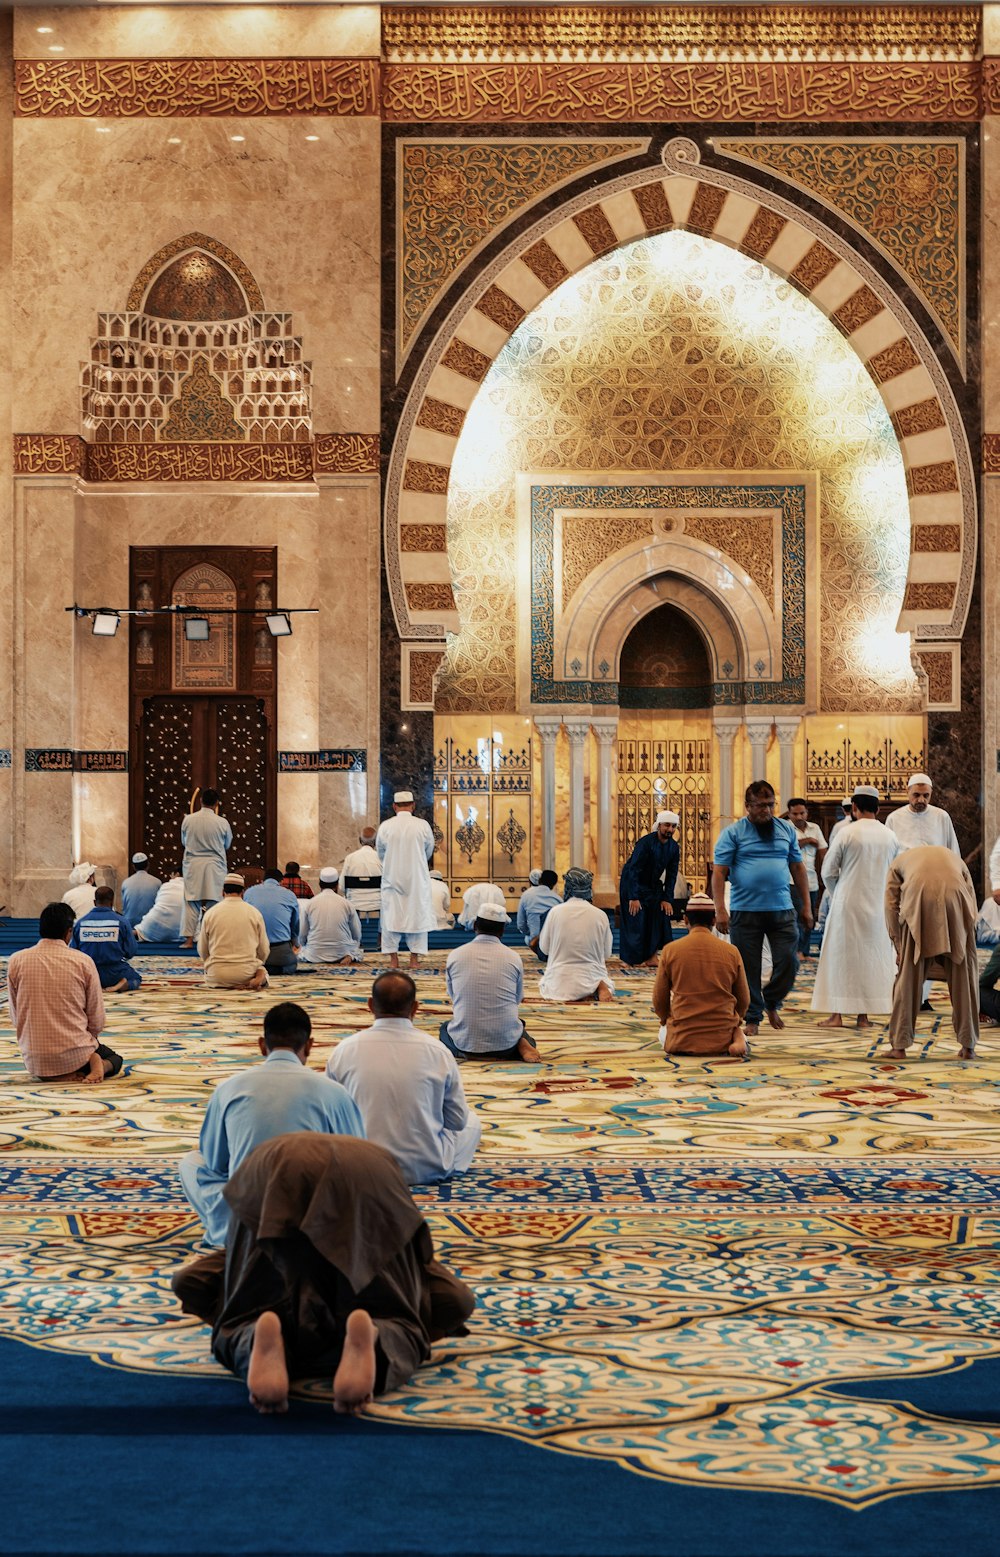 1500+ Eid Mubarak Pictures | Download Free Images on Unsplash